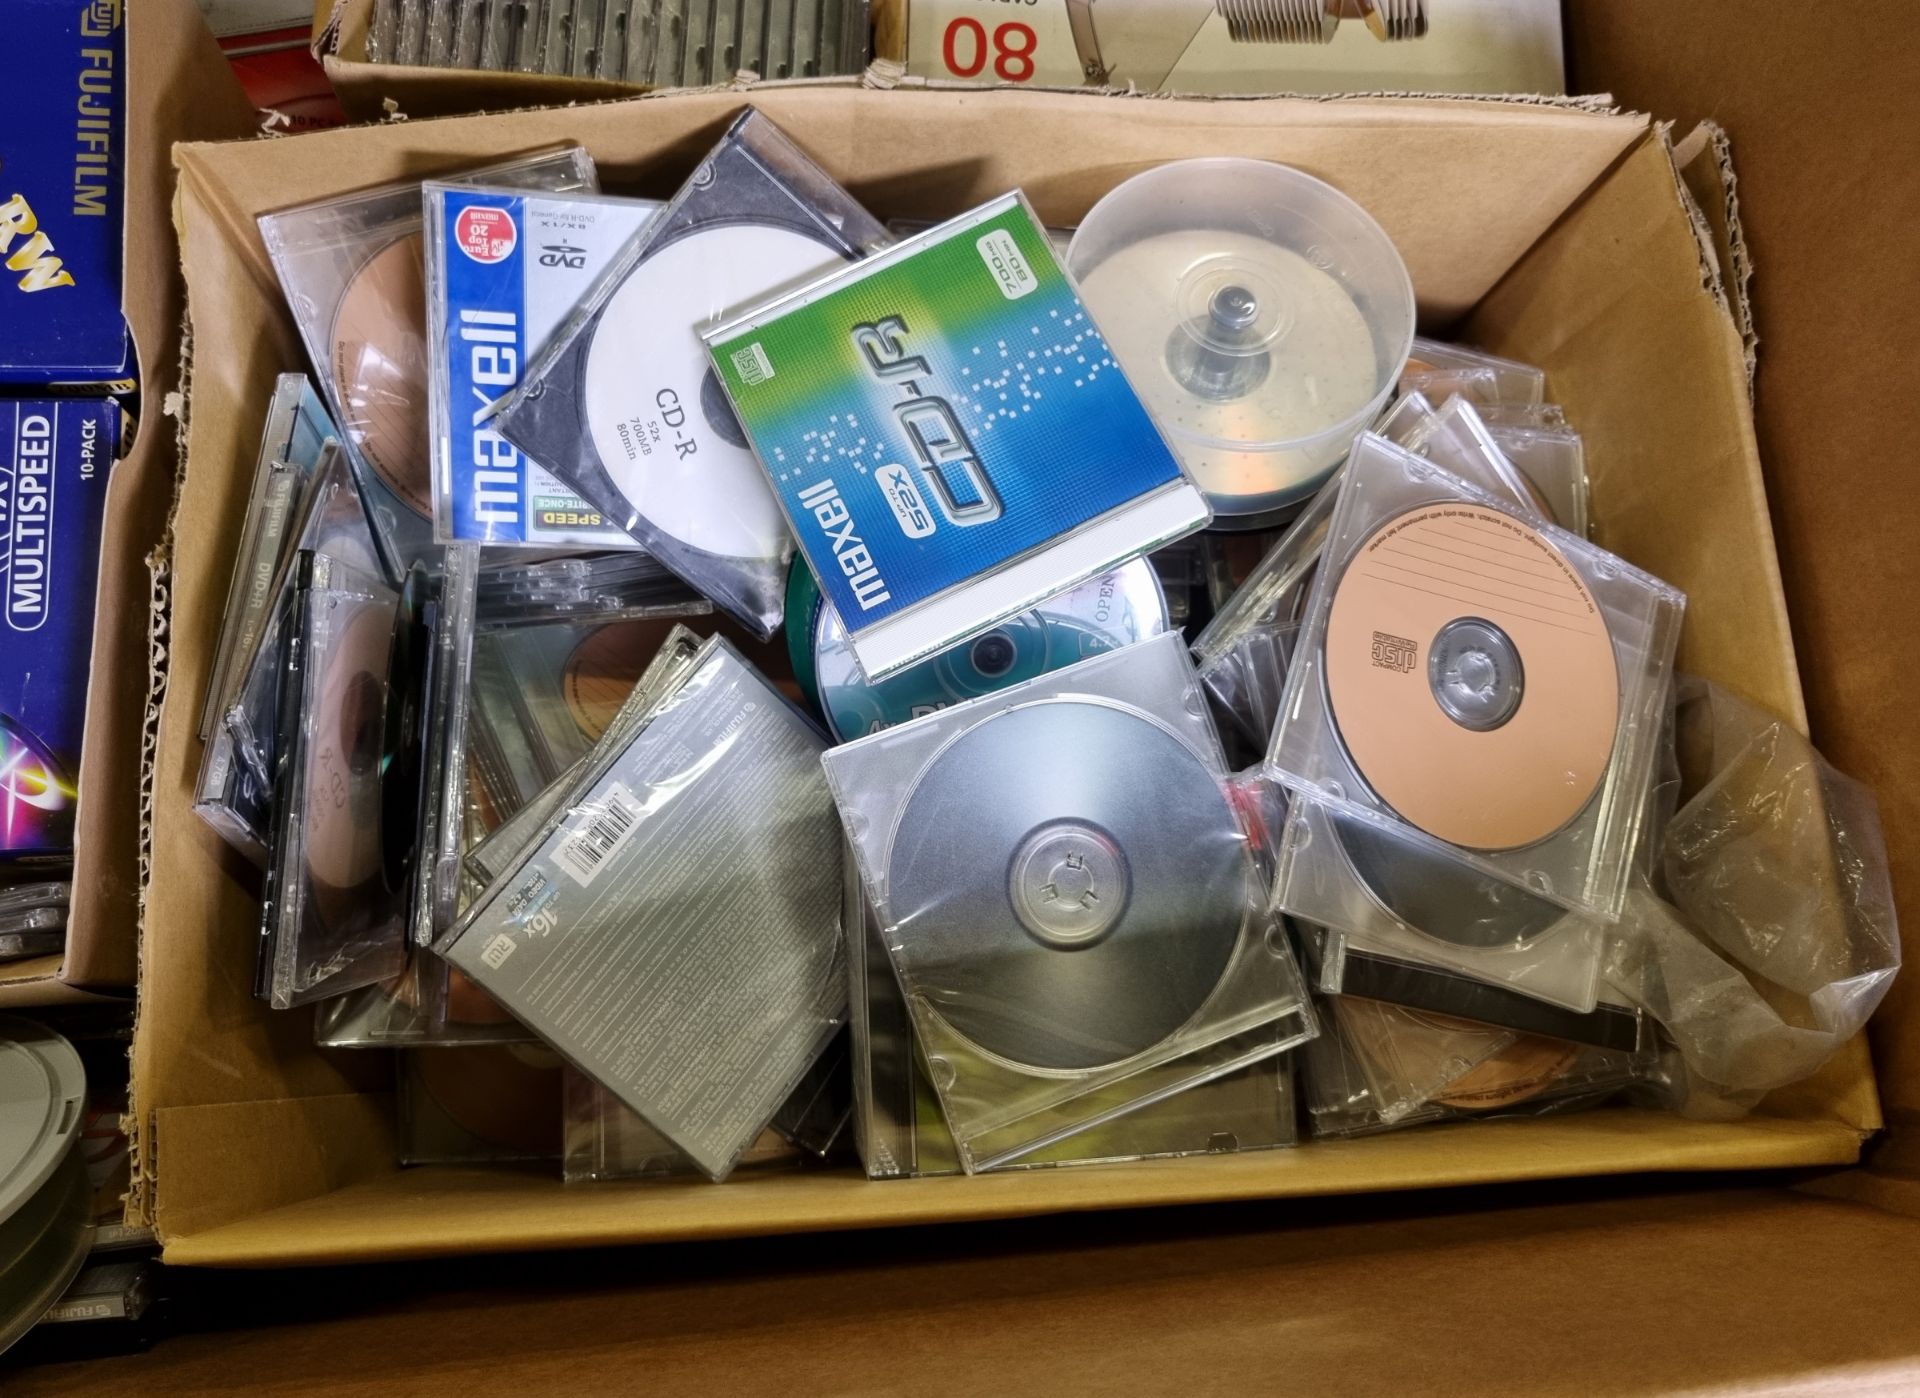 Office stationery supplies - FujiFilm CD-R discs, Maxell CD-R discs, Fuji DVD-R discs, CD-ROM - Bild 2 aus 6